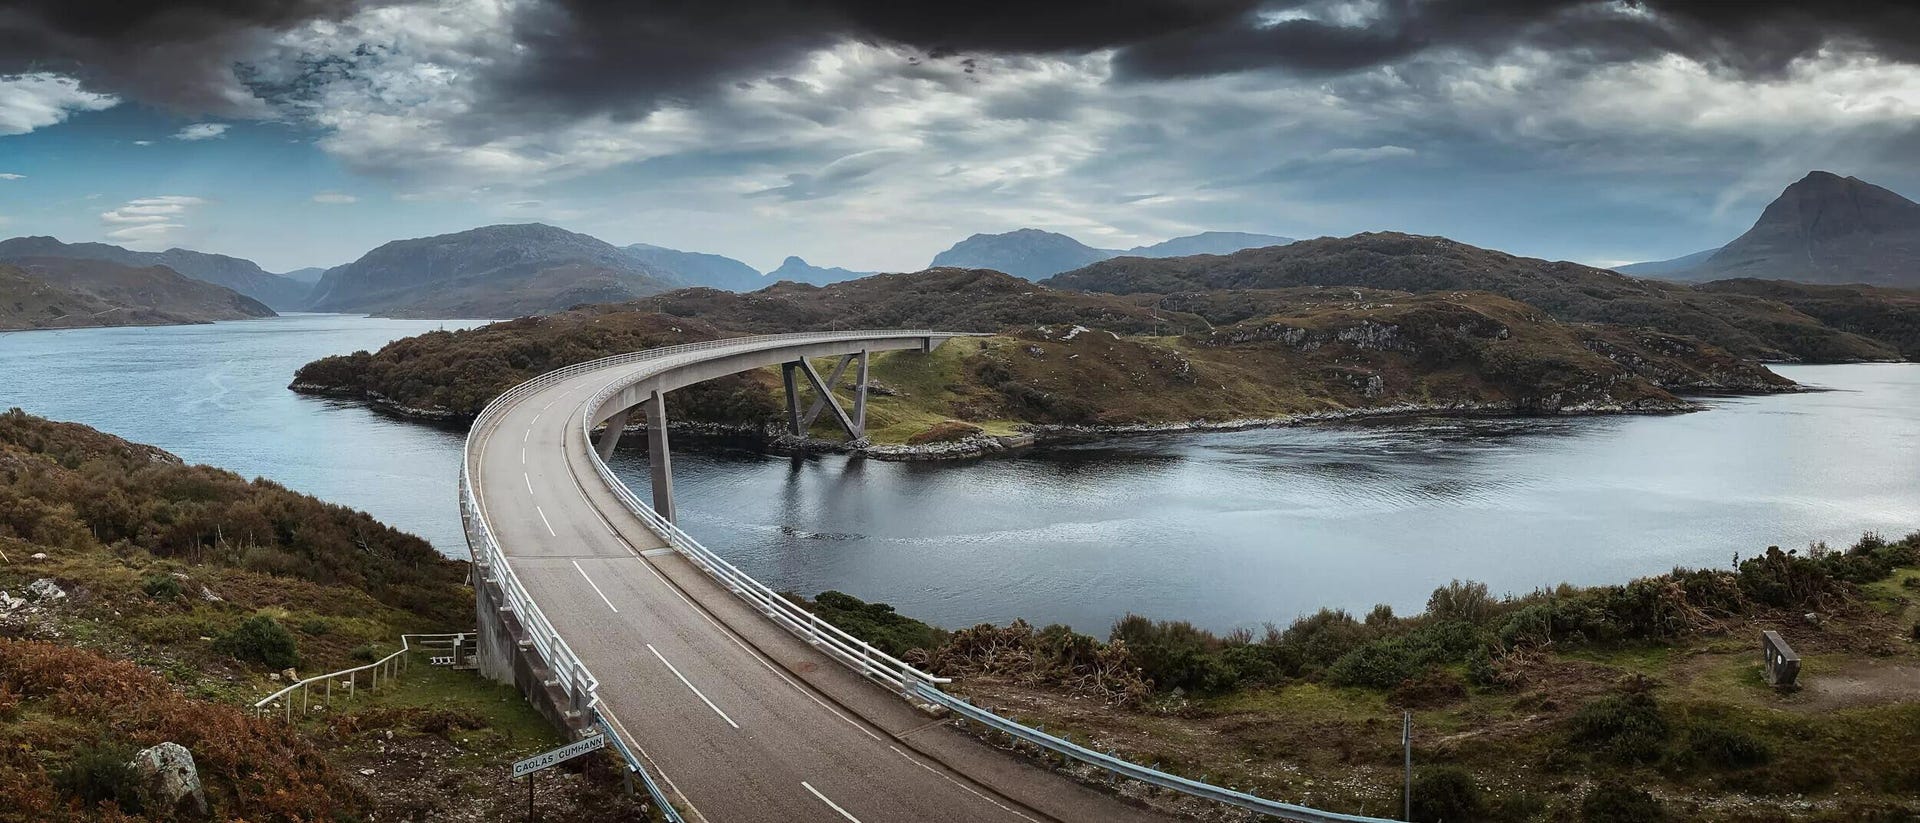 Scotland's Kylesku bridge